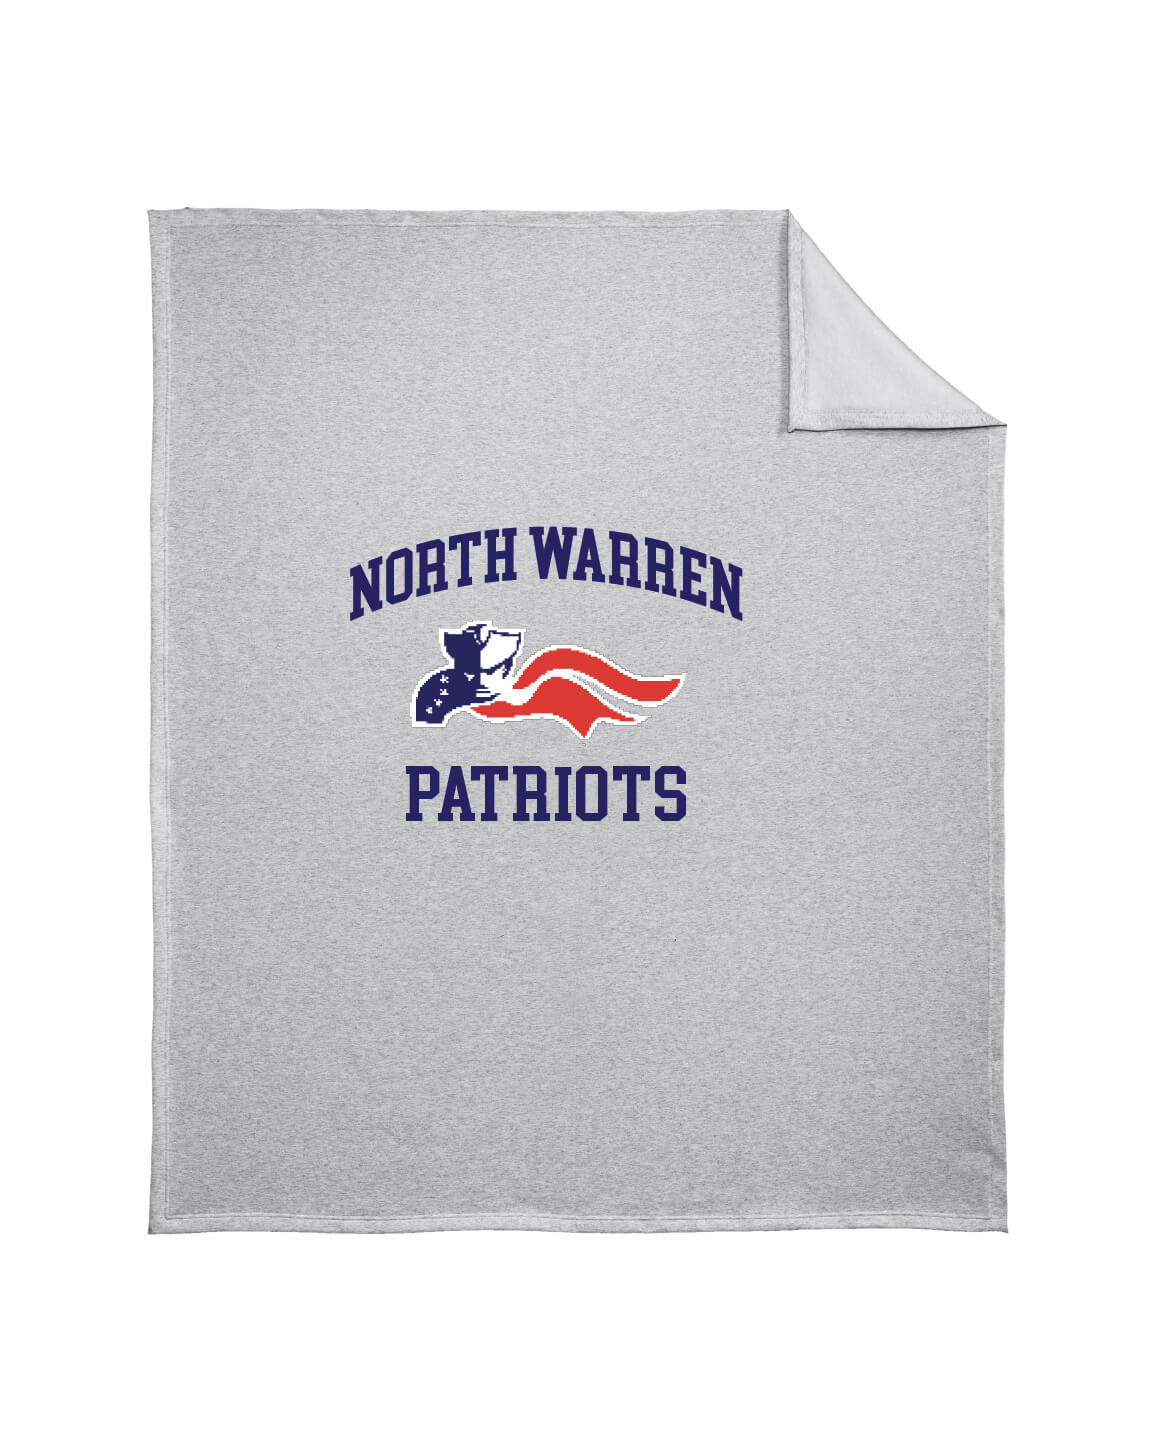 Sweatshirt Blanket NW Patriots gray